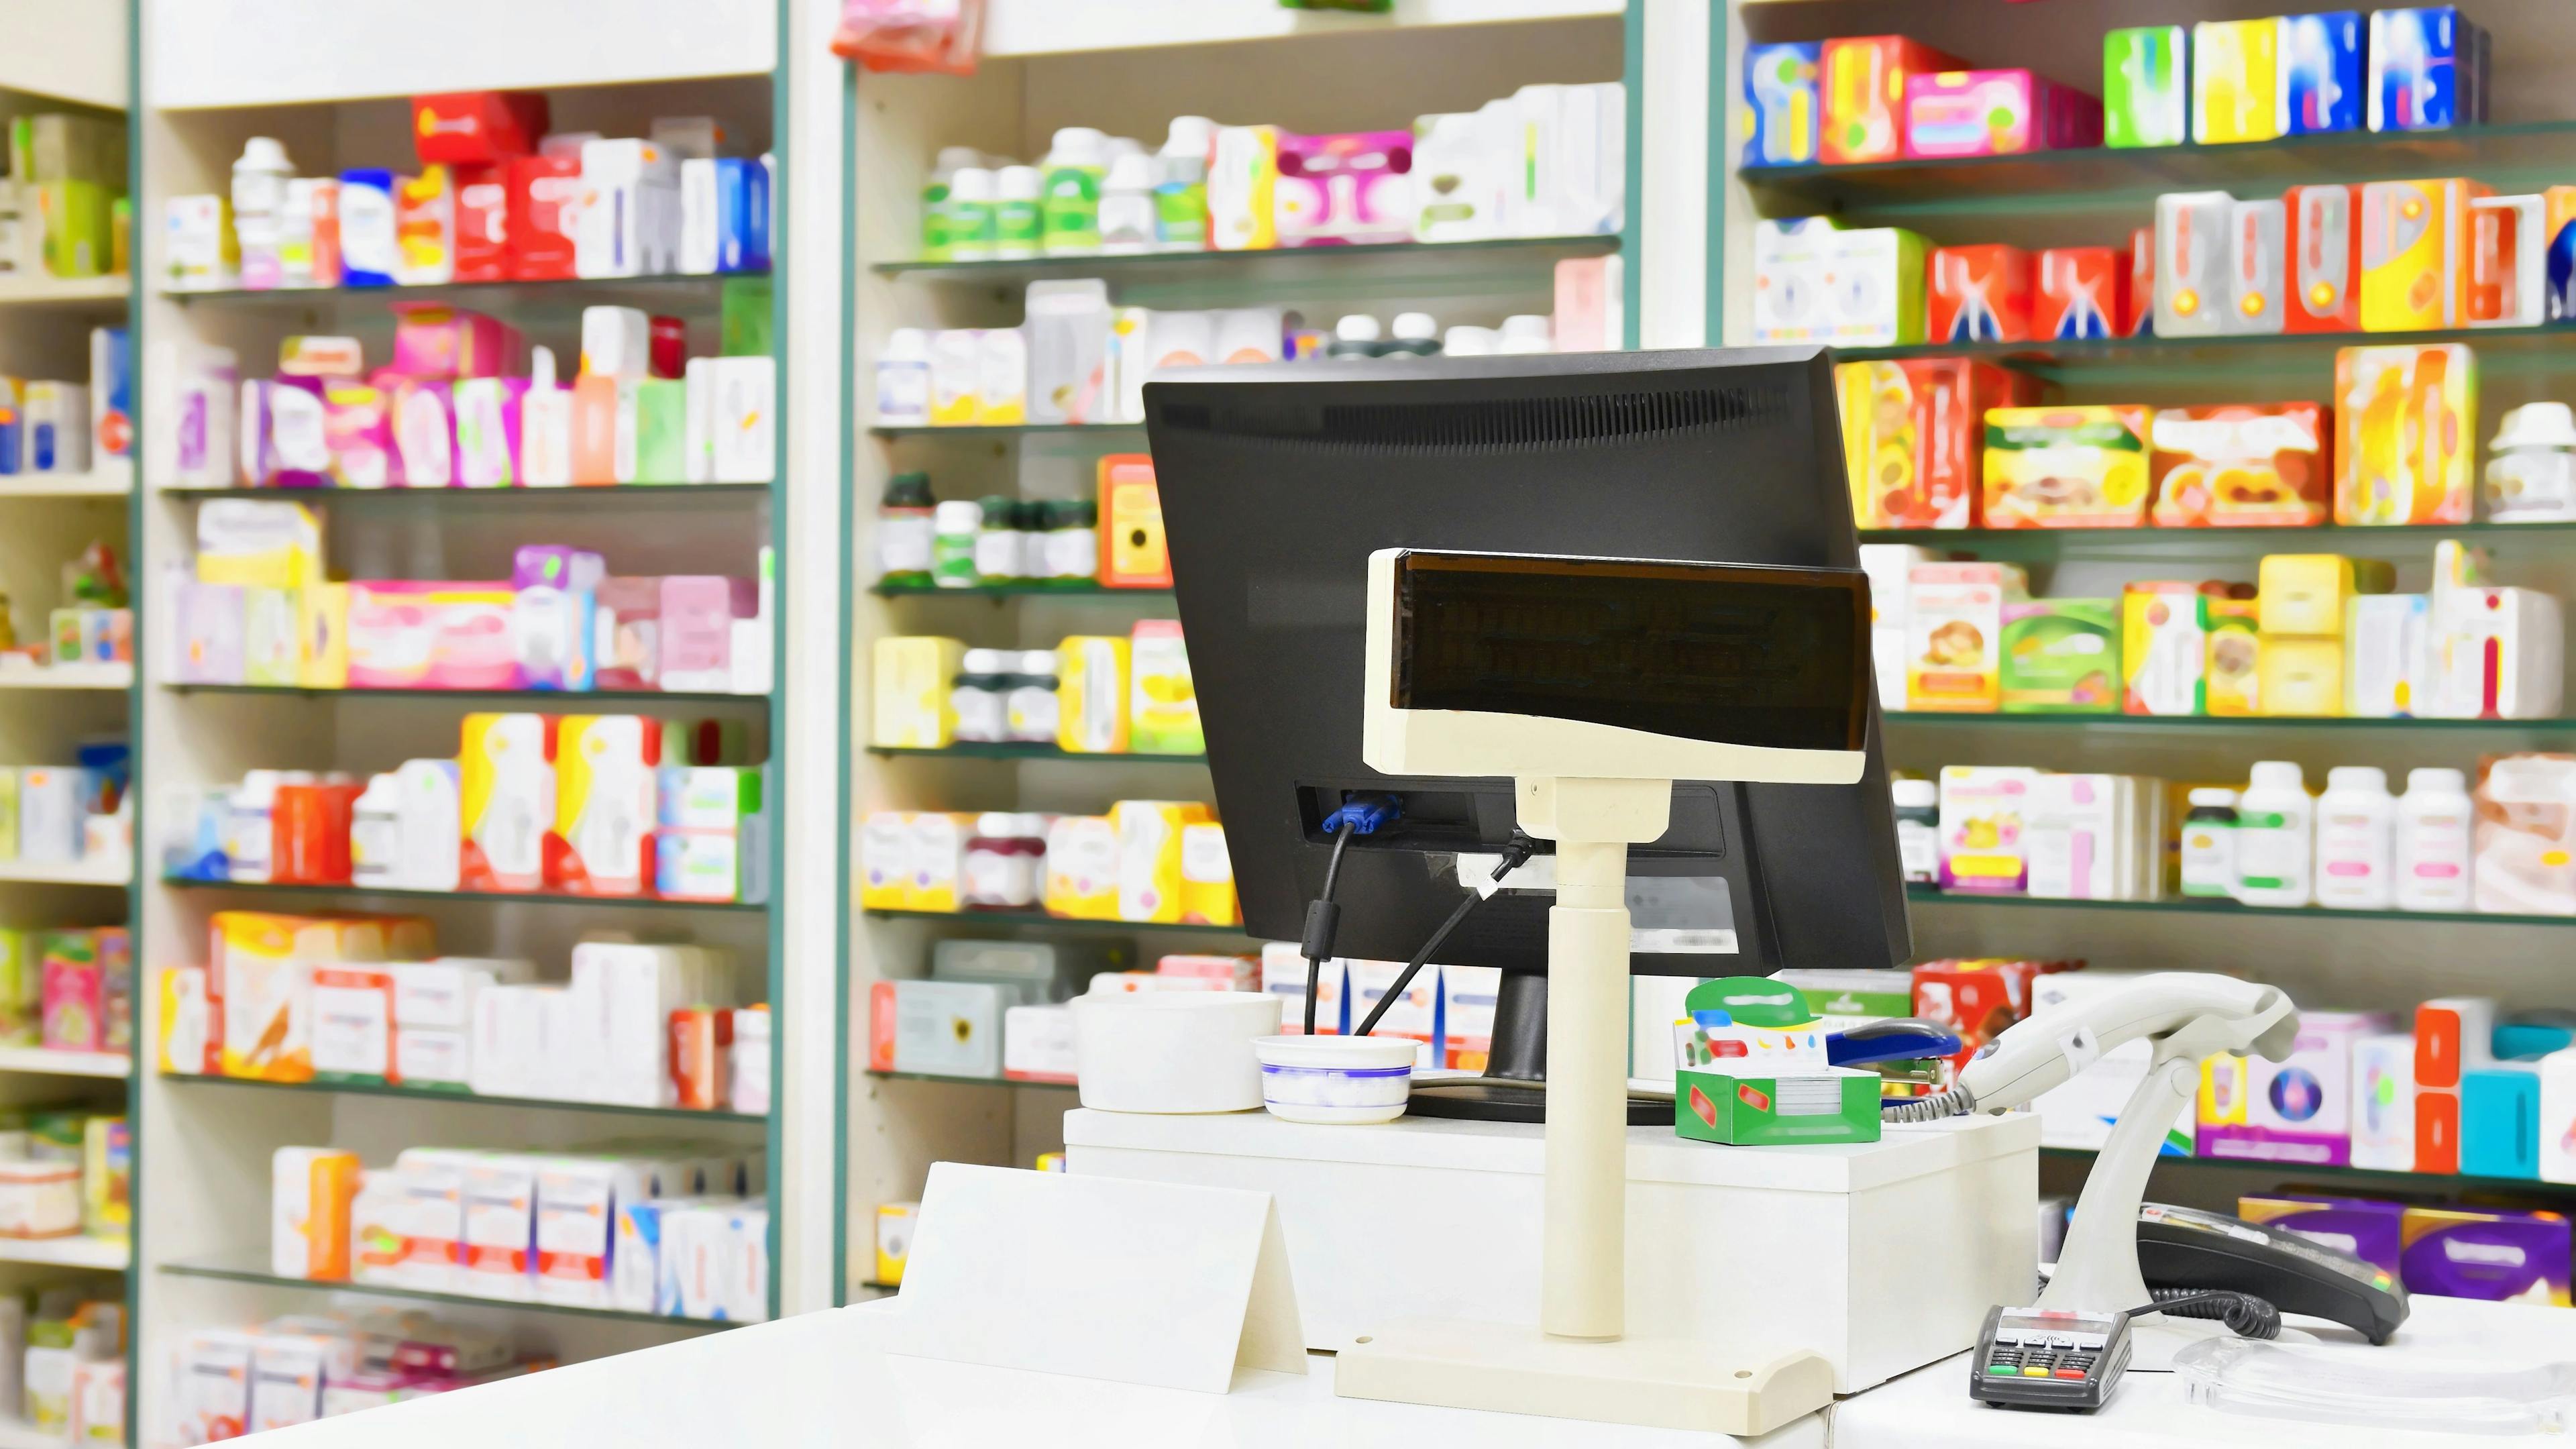 Prescriber Alleges Defamation Against Pharmacy Chain